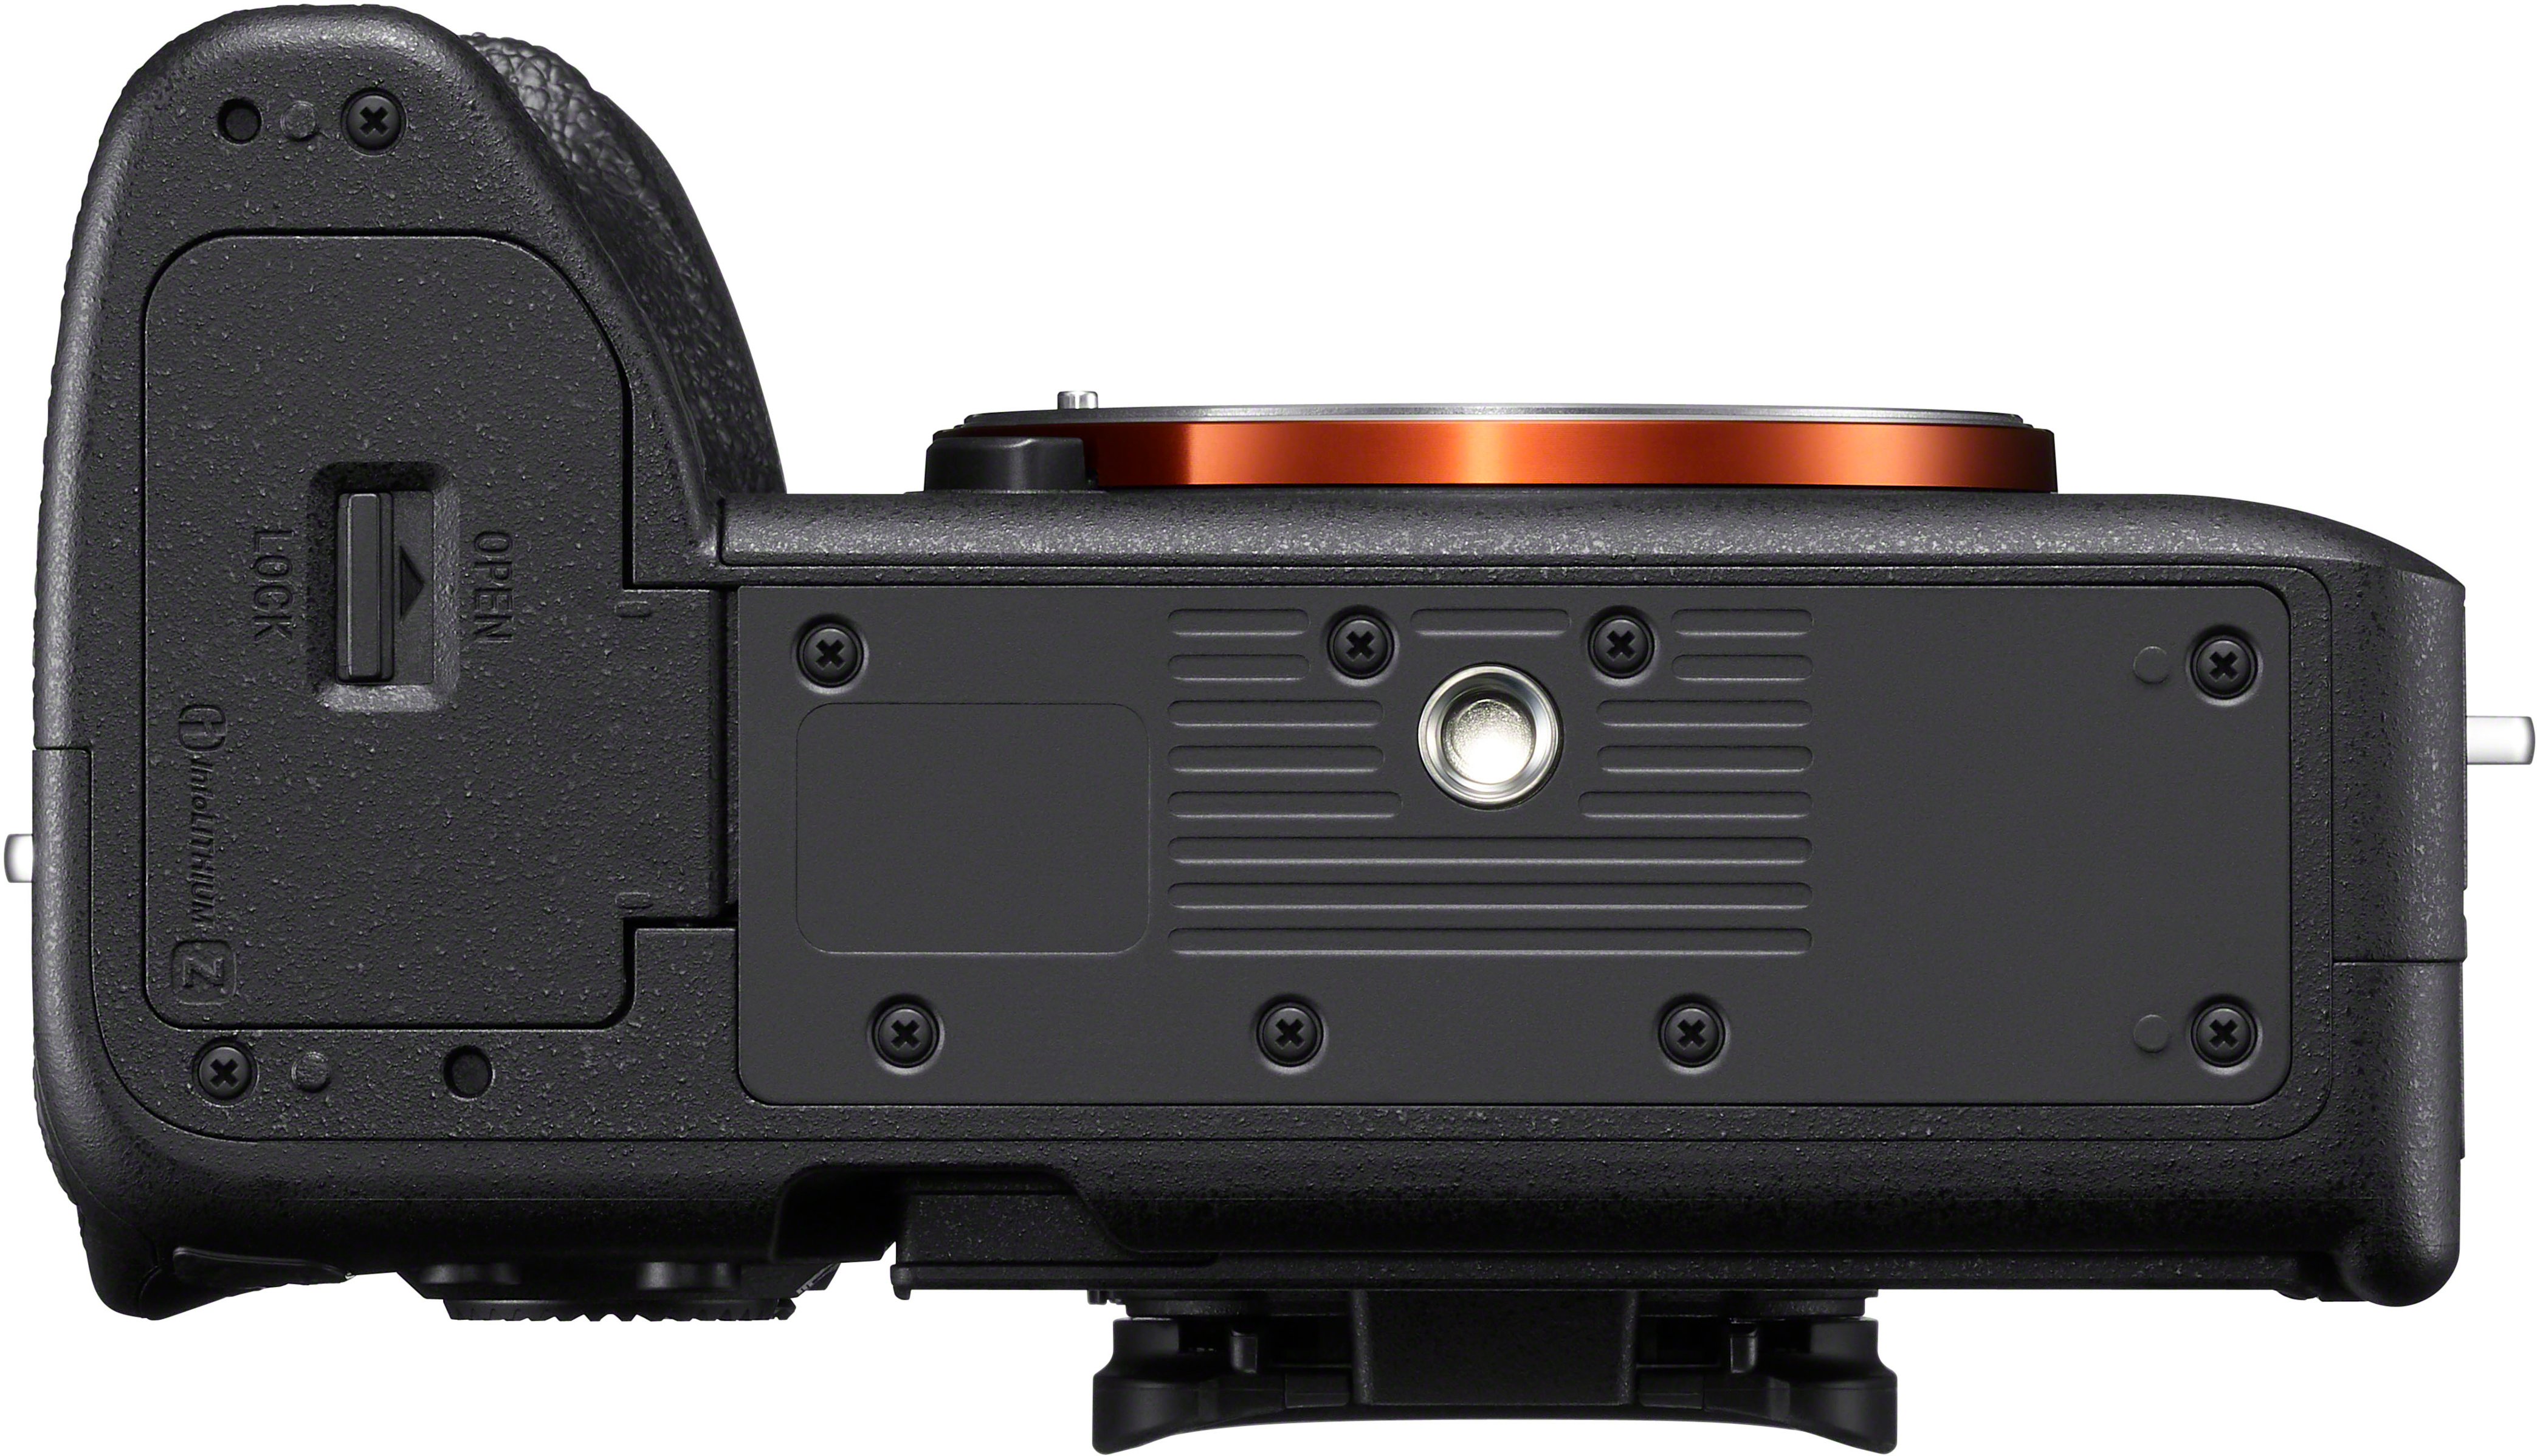 Sony Alpha 7 IV Full-Frame Mirrorless Camera Body Only Bundle Black